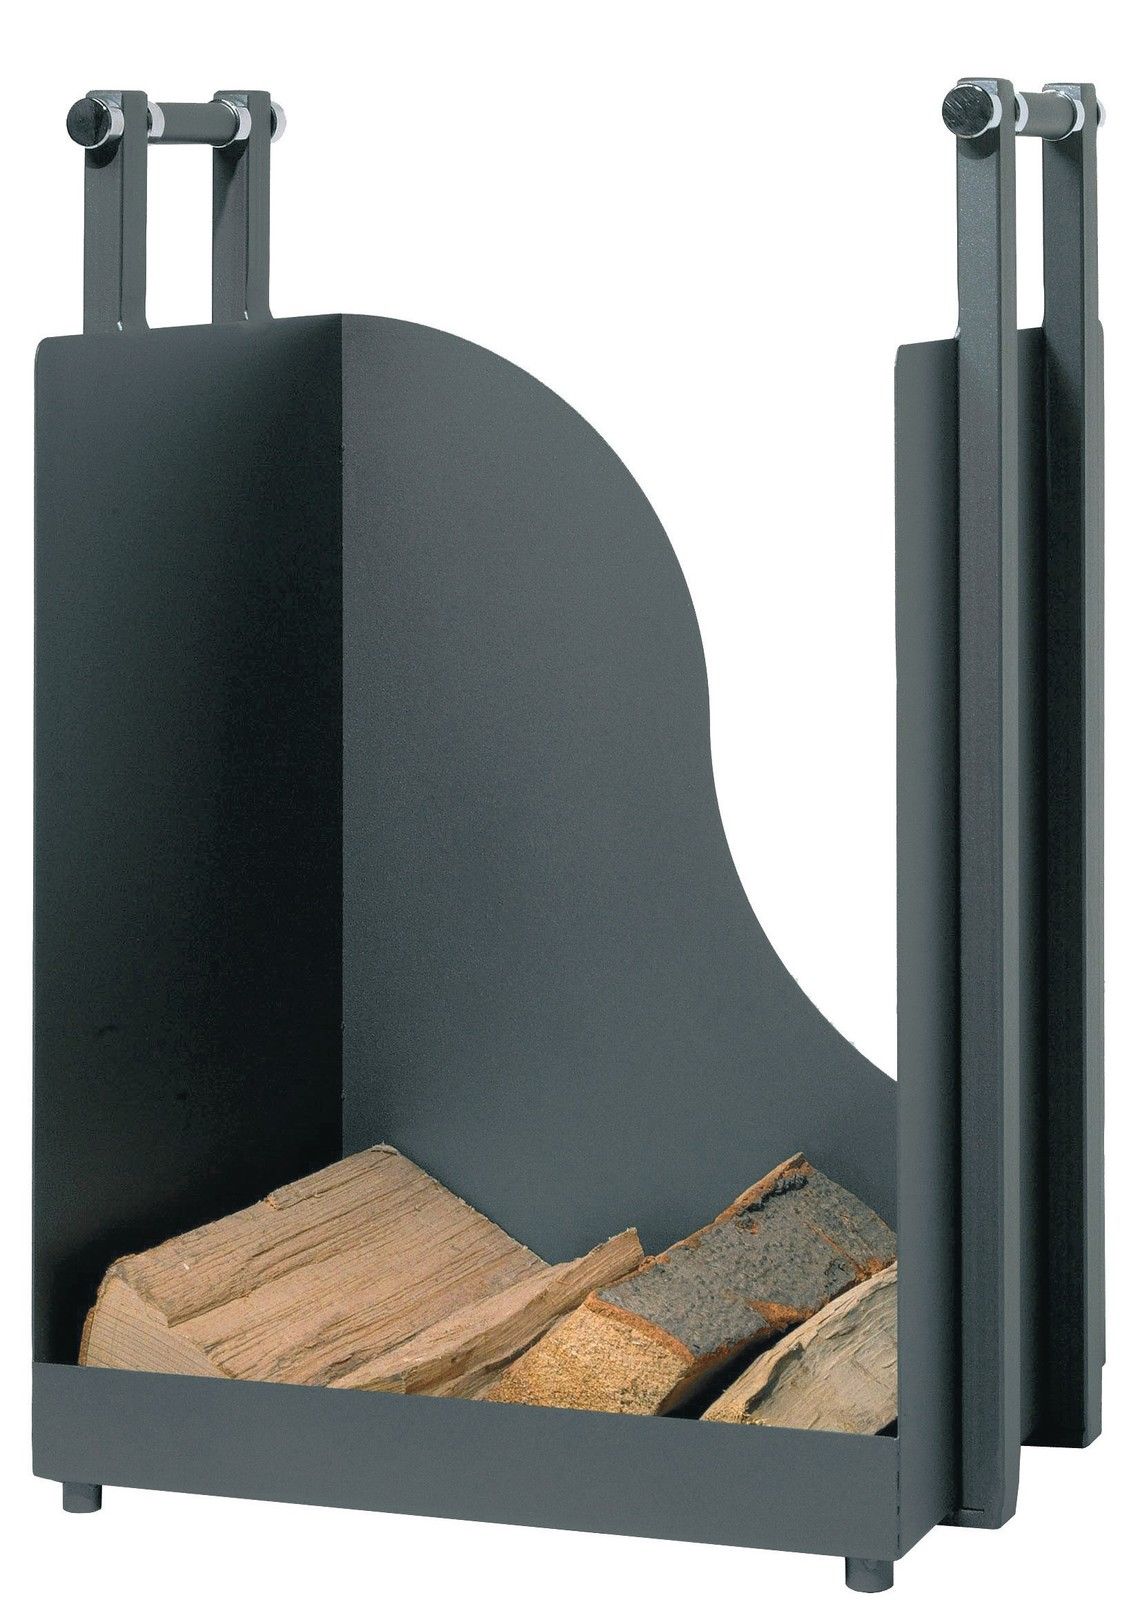 Holzkorb Holzkiste Kaminholzkorb anthrazit beschichtet B H T = 40 x 57 x 36  cm | Kaminzubehör - Holzkörbe - Beschlagsshop